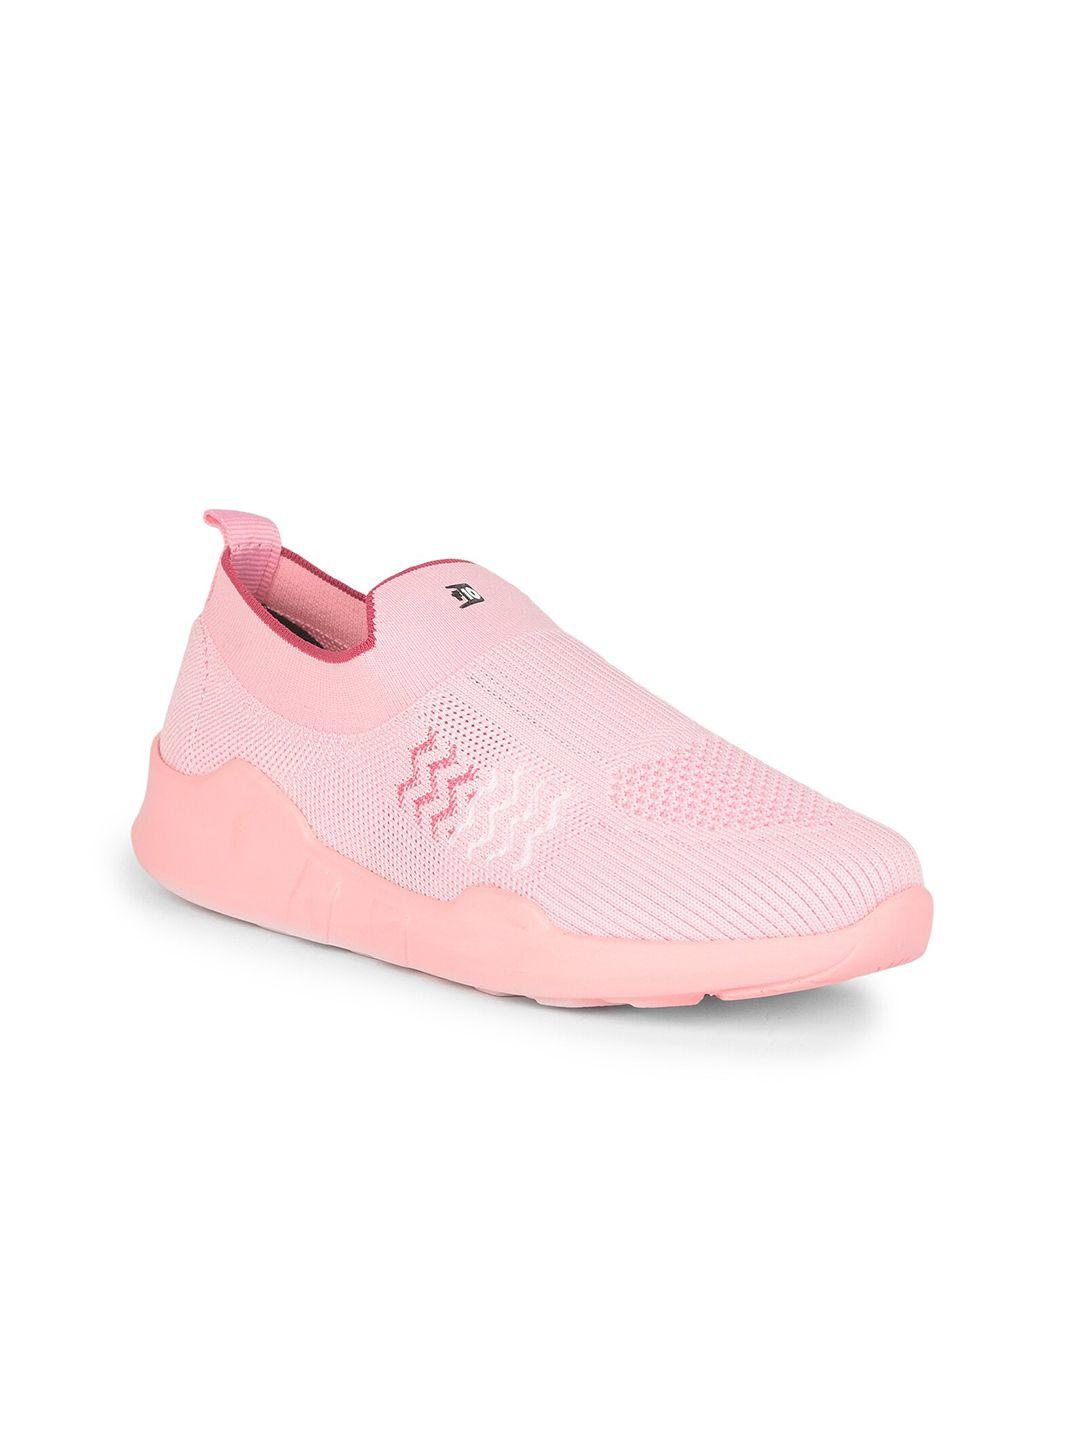 liberty women pink walking shoes